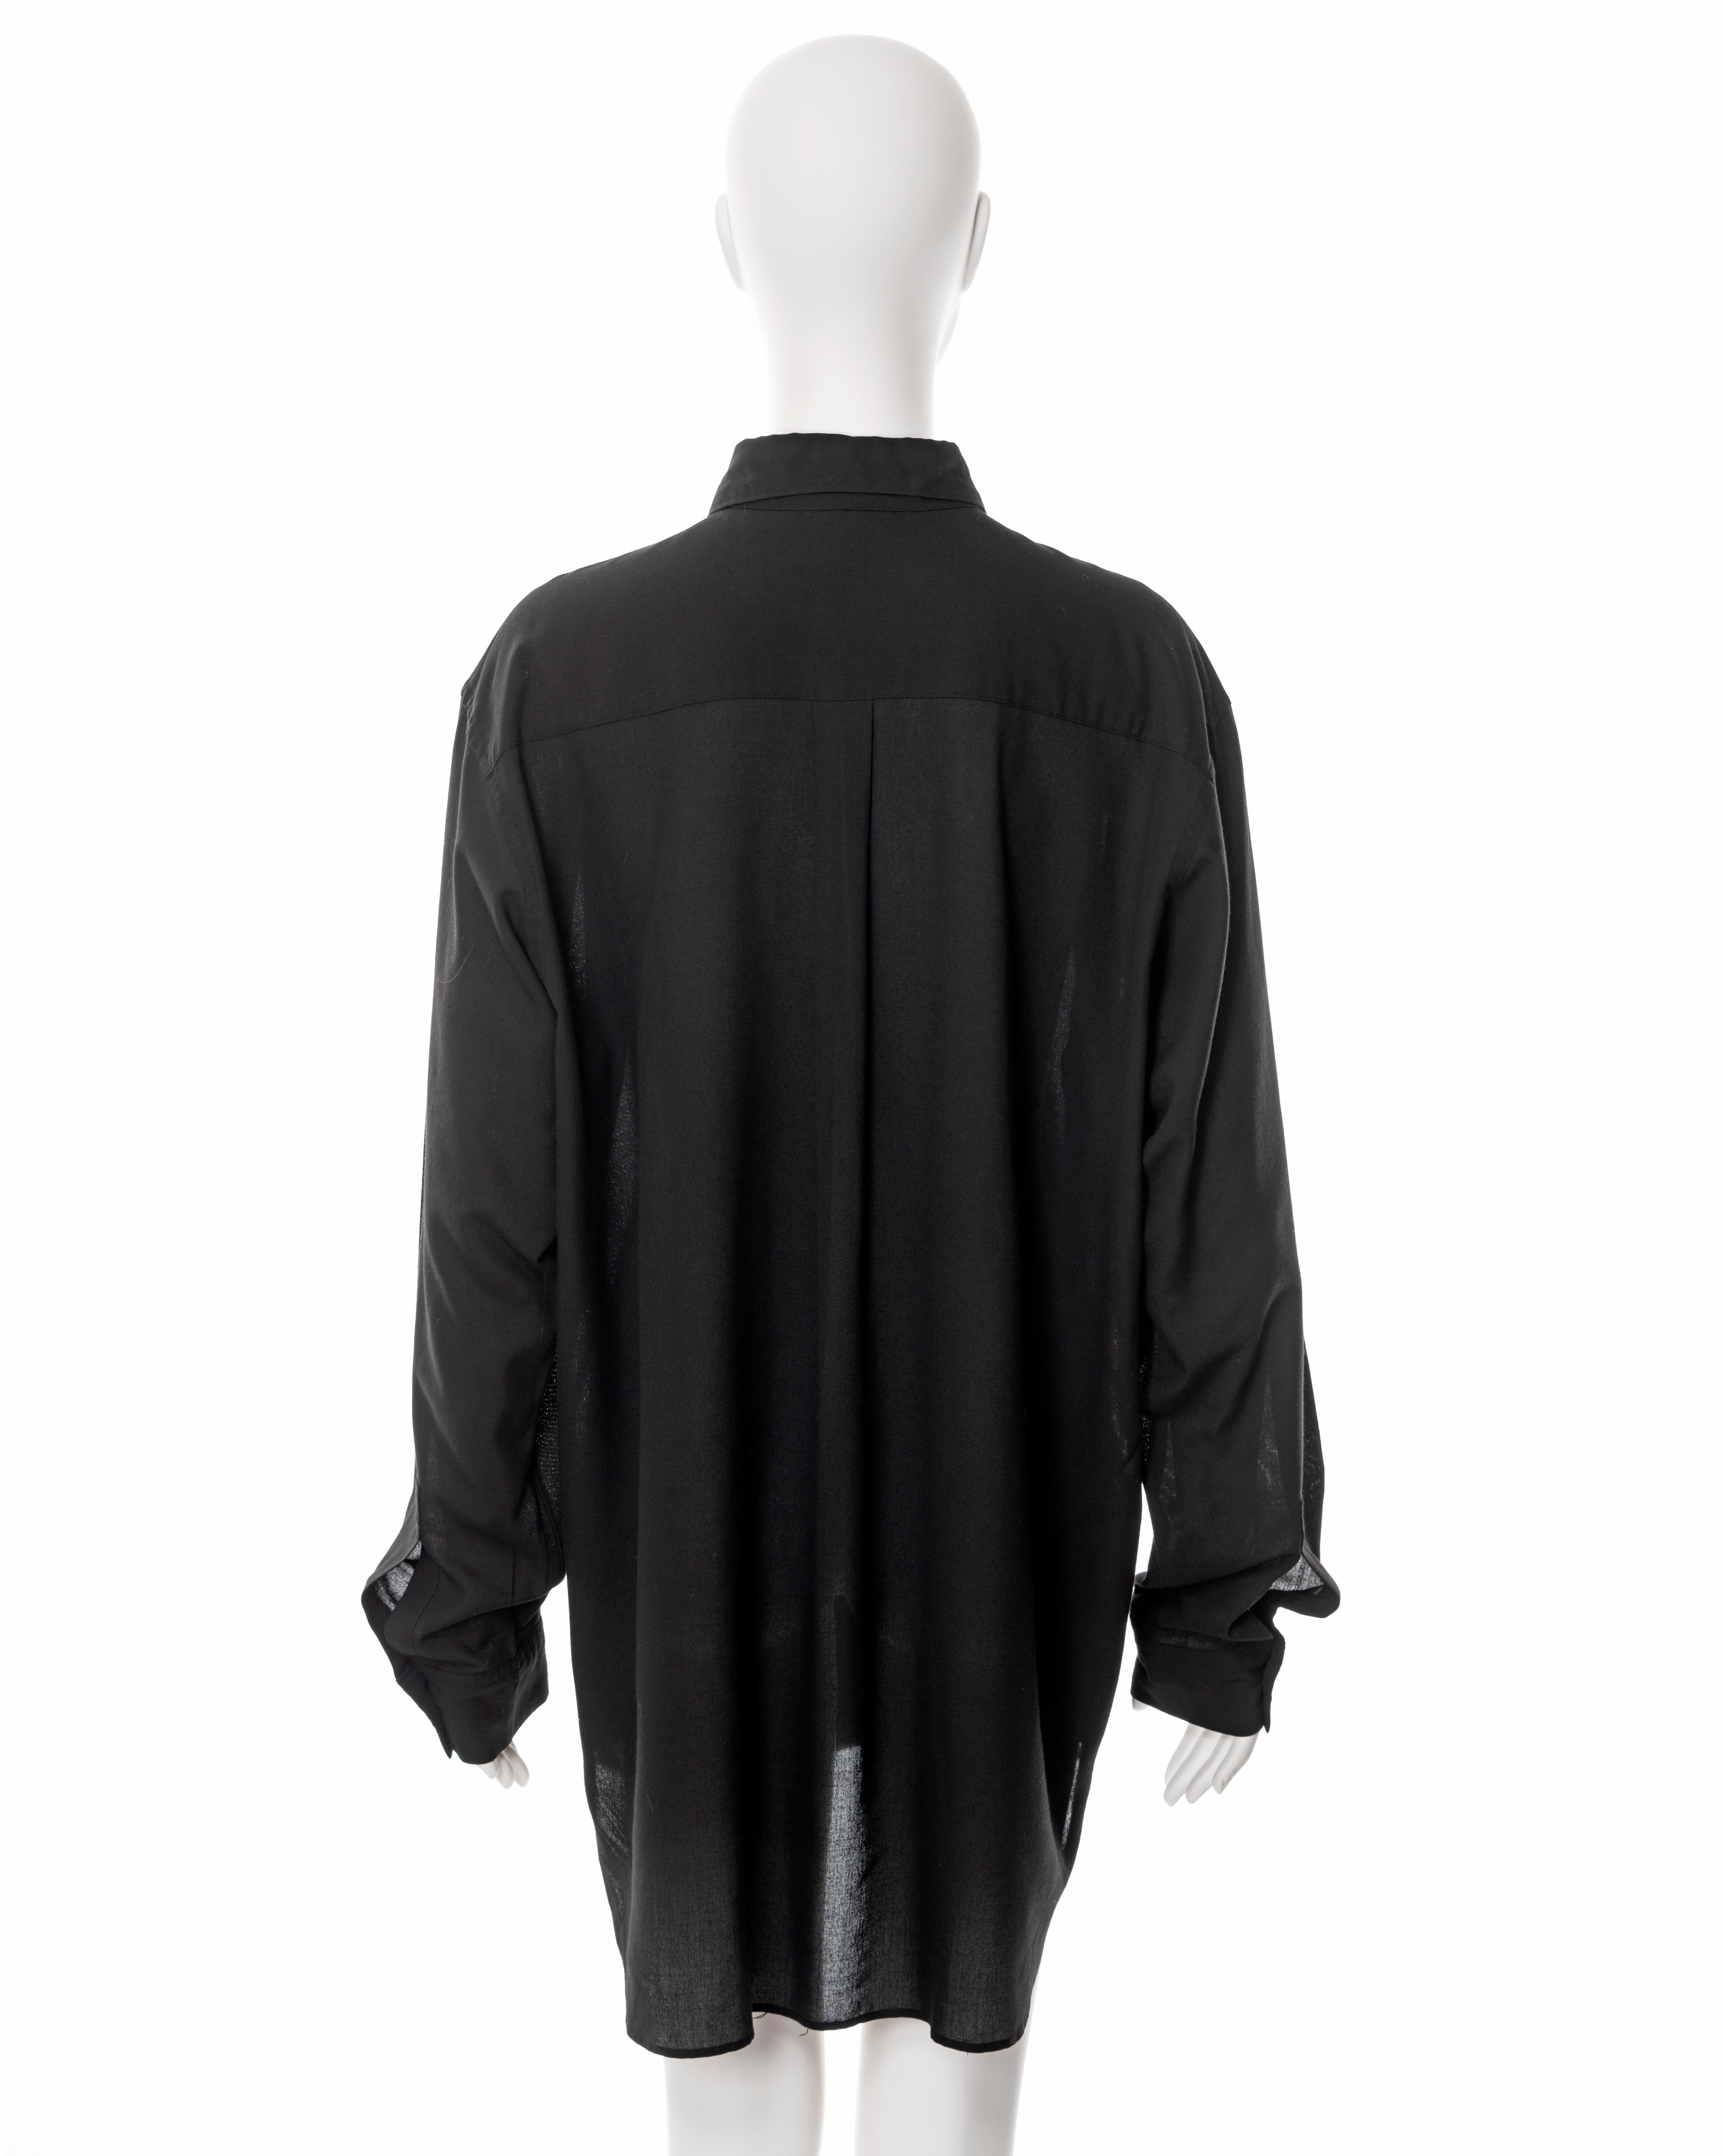 Yohji Yamamoto men's black rayon 'Smiley Face' shirt, fw 1991 For Sale 5